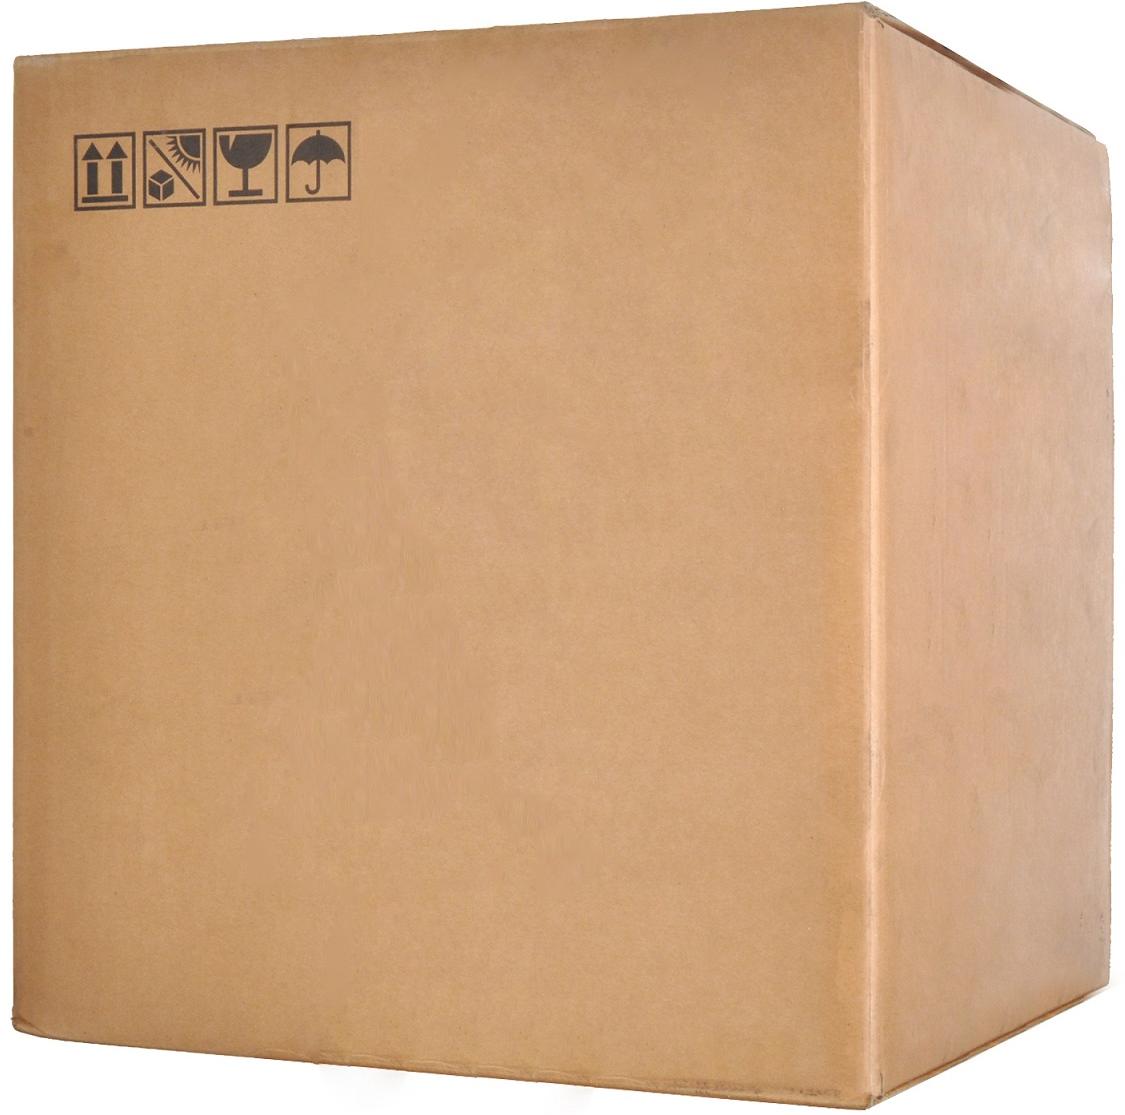 Тонер B&W HST-025-20K, коробка 10 кг, черный, совместимый для LJ1010/1200/1100/1320/4000/5000/8100/P2035/2055/M401/M425, 2шт